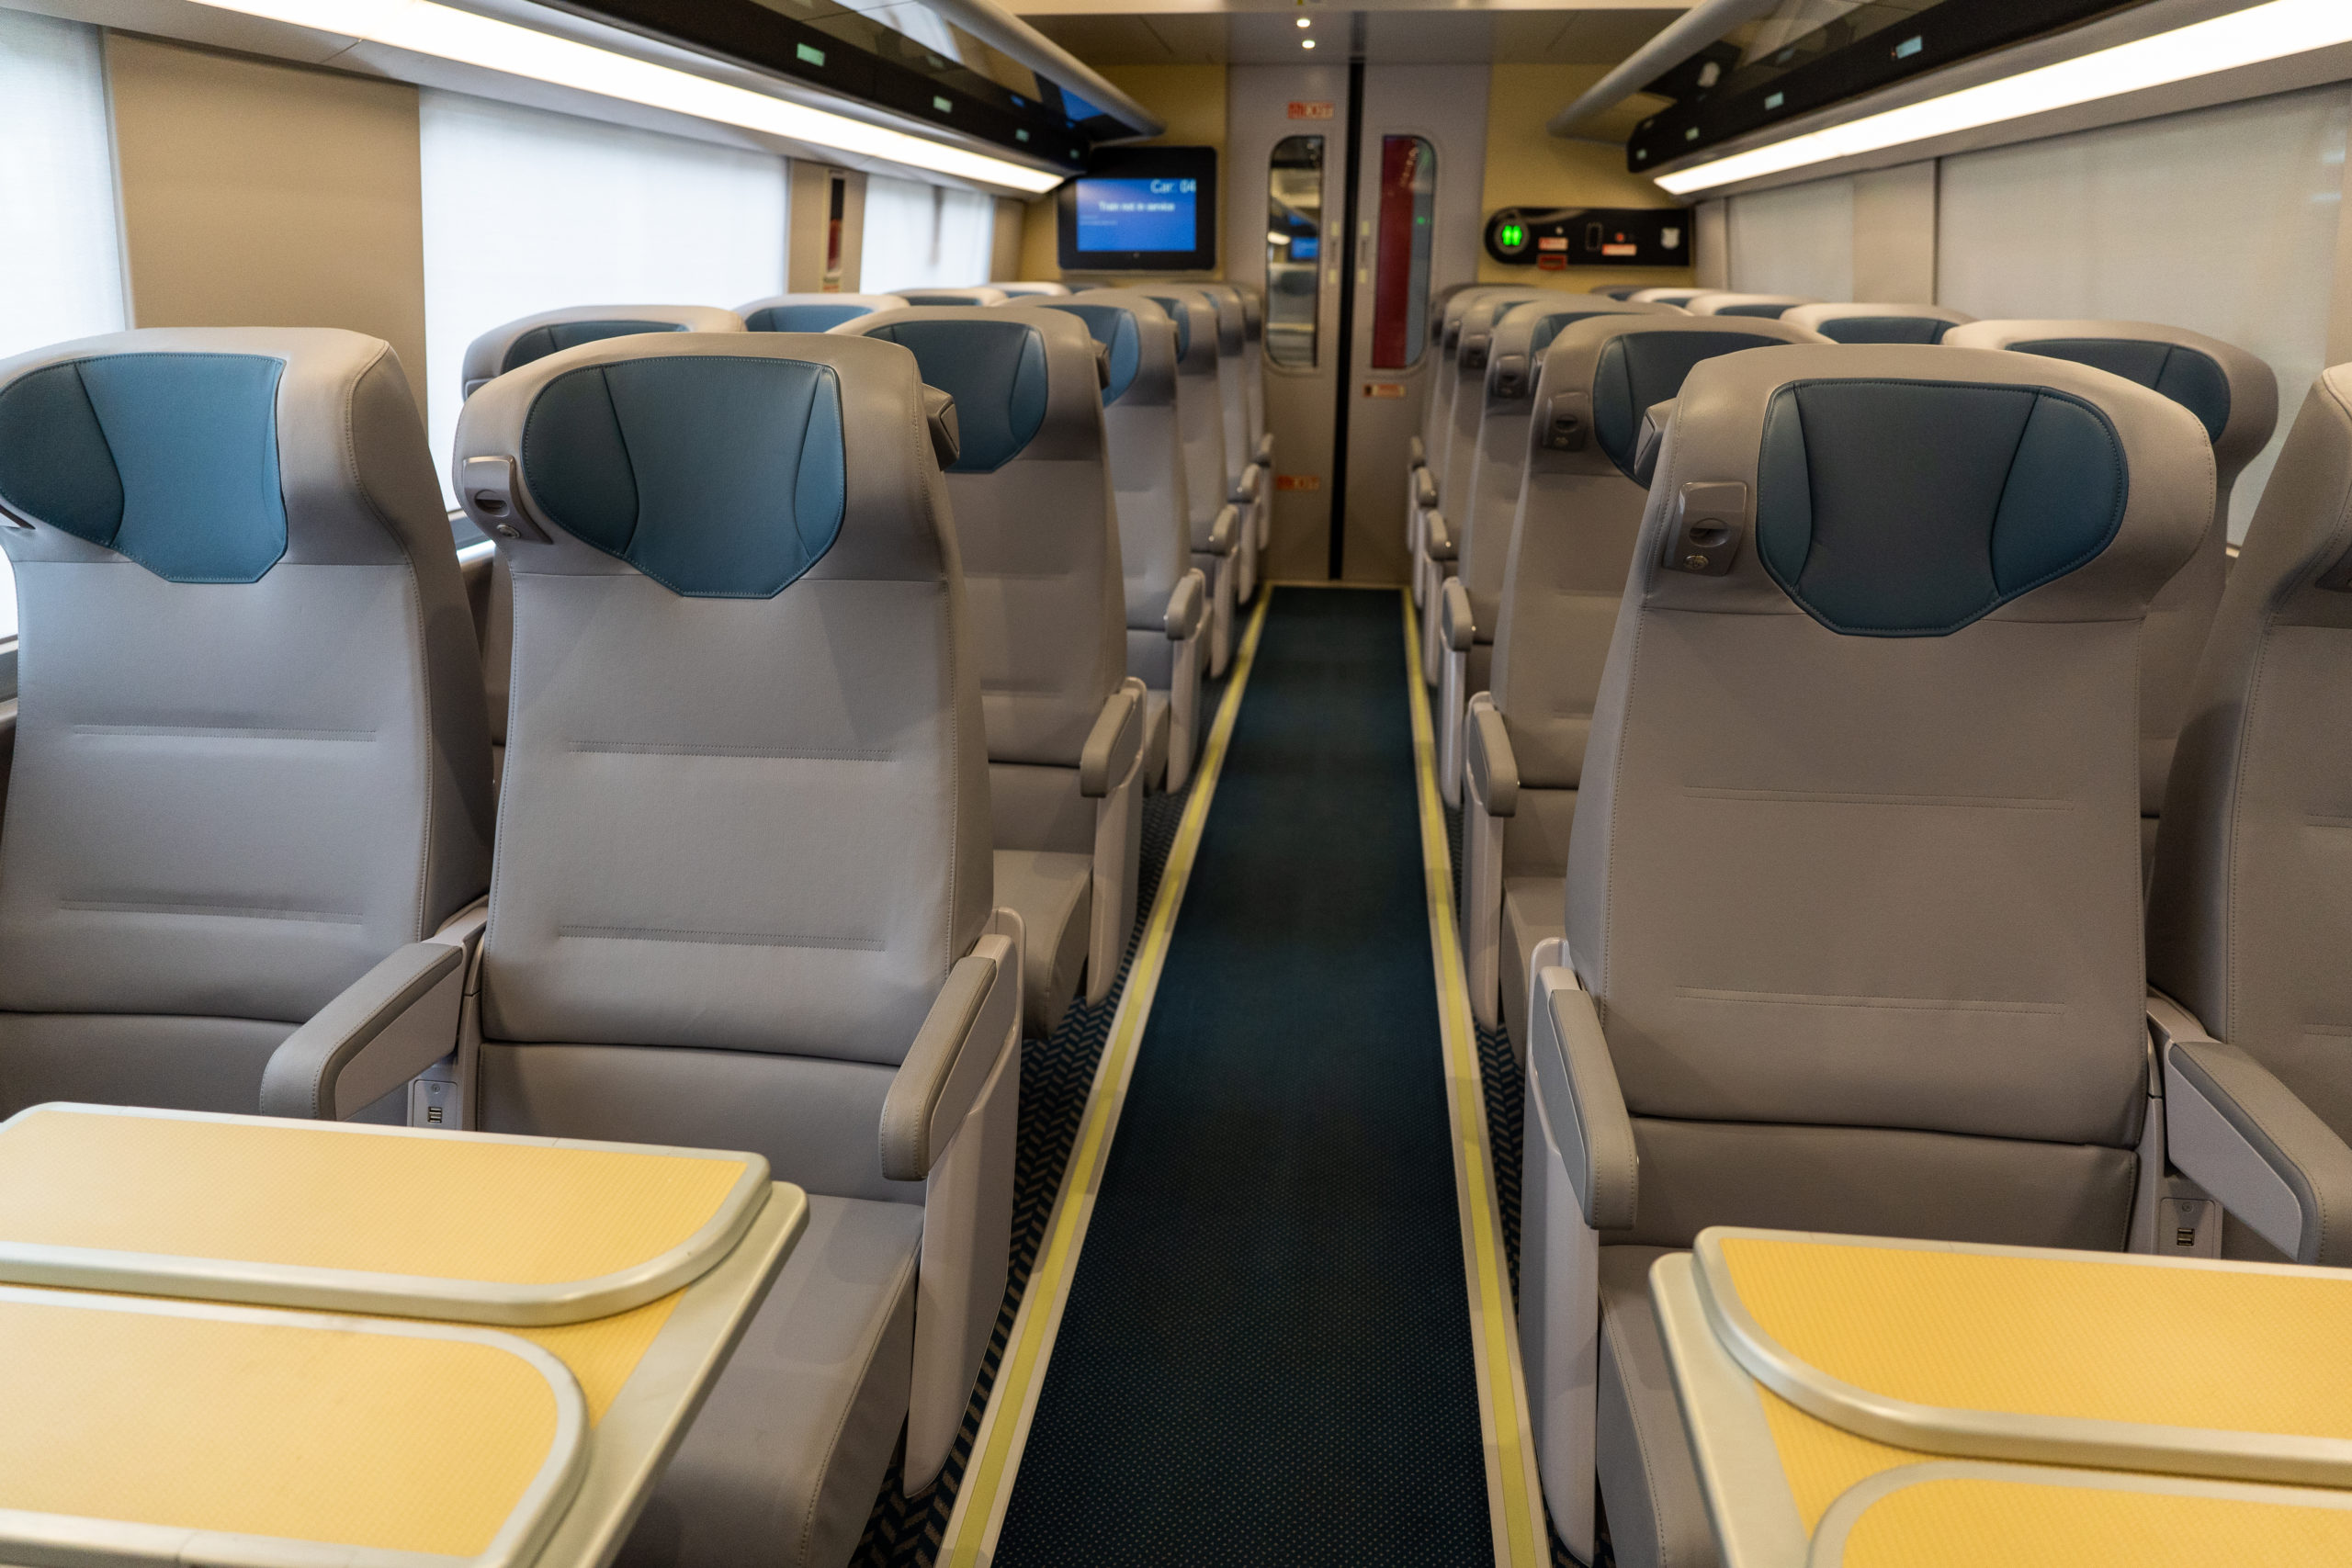 The New Acela train interior